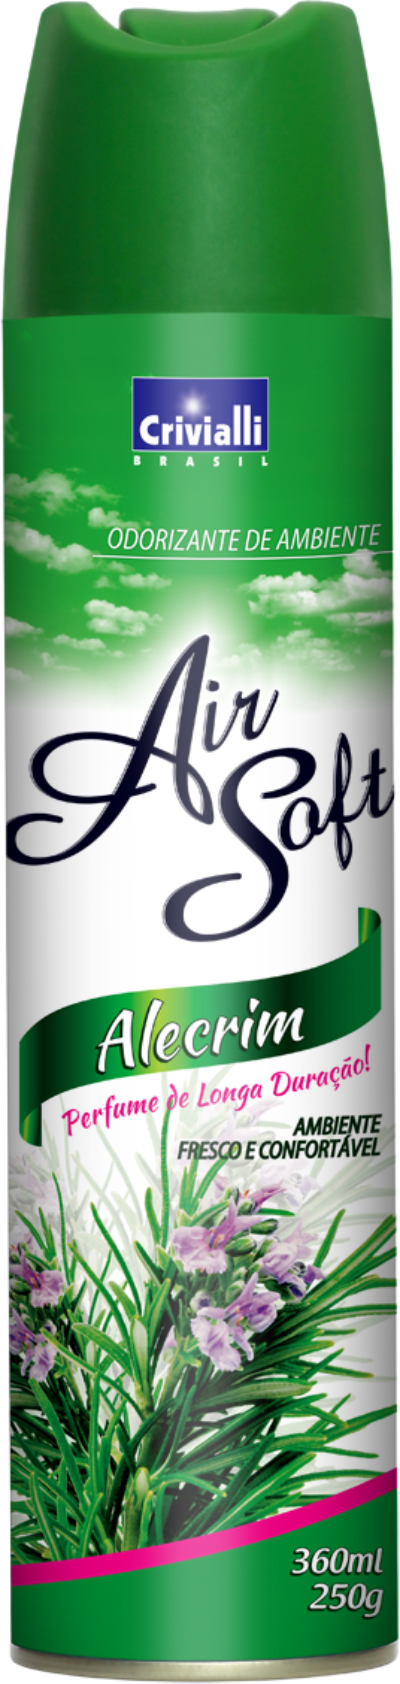 Air Soft Alecrim 360ml/250g